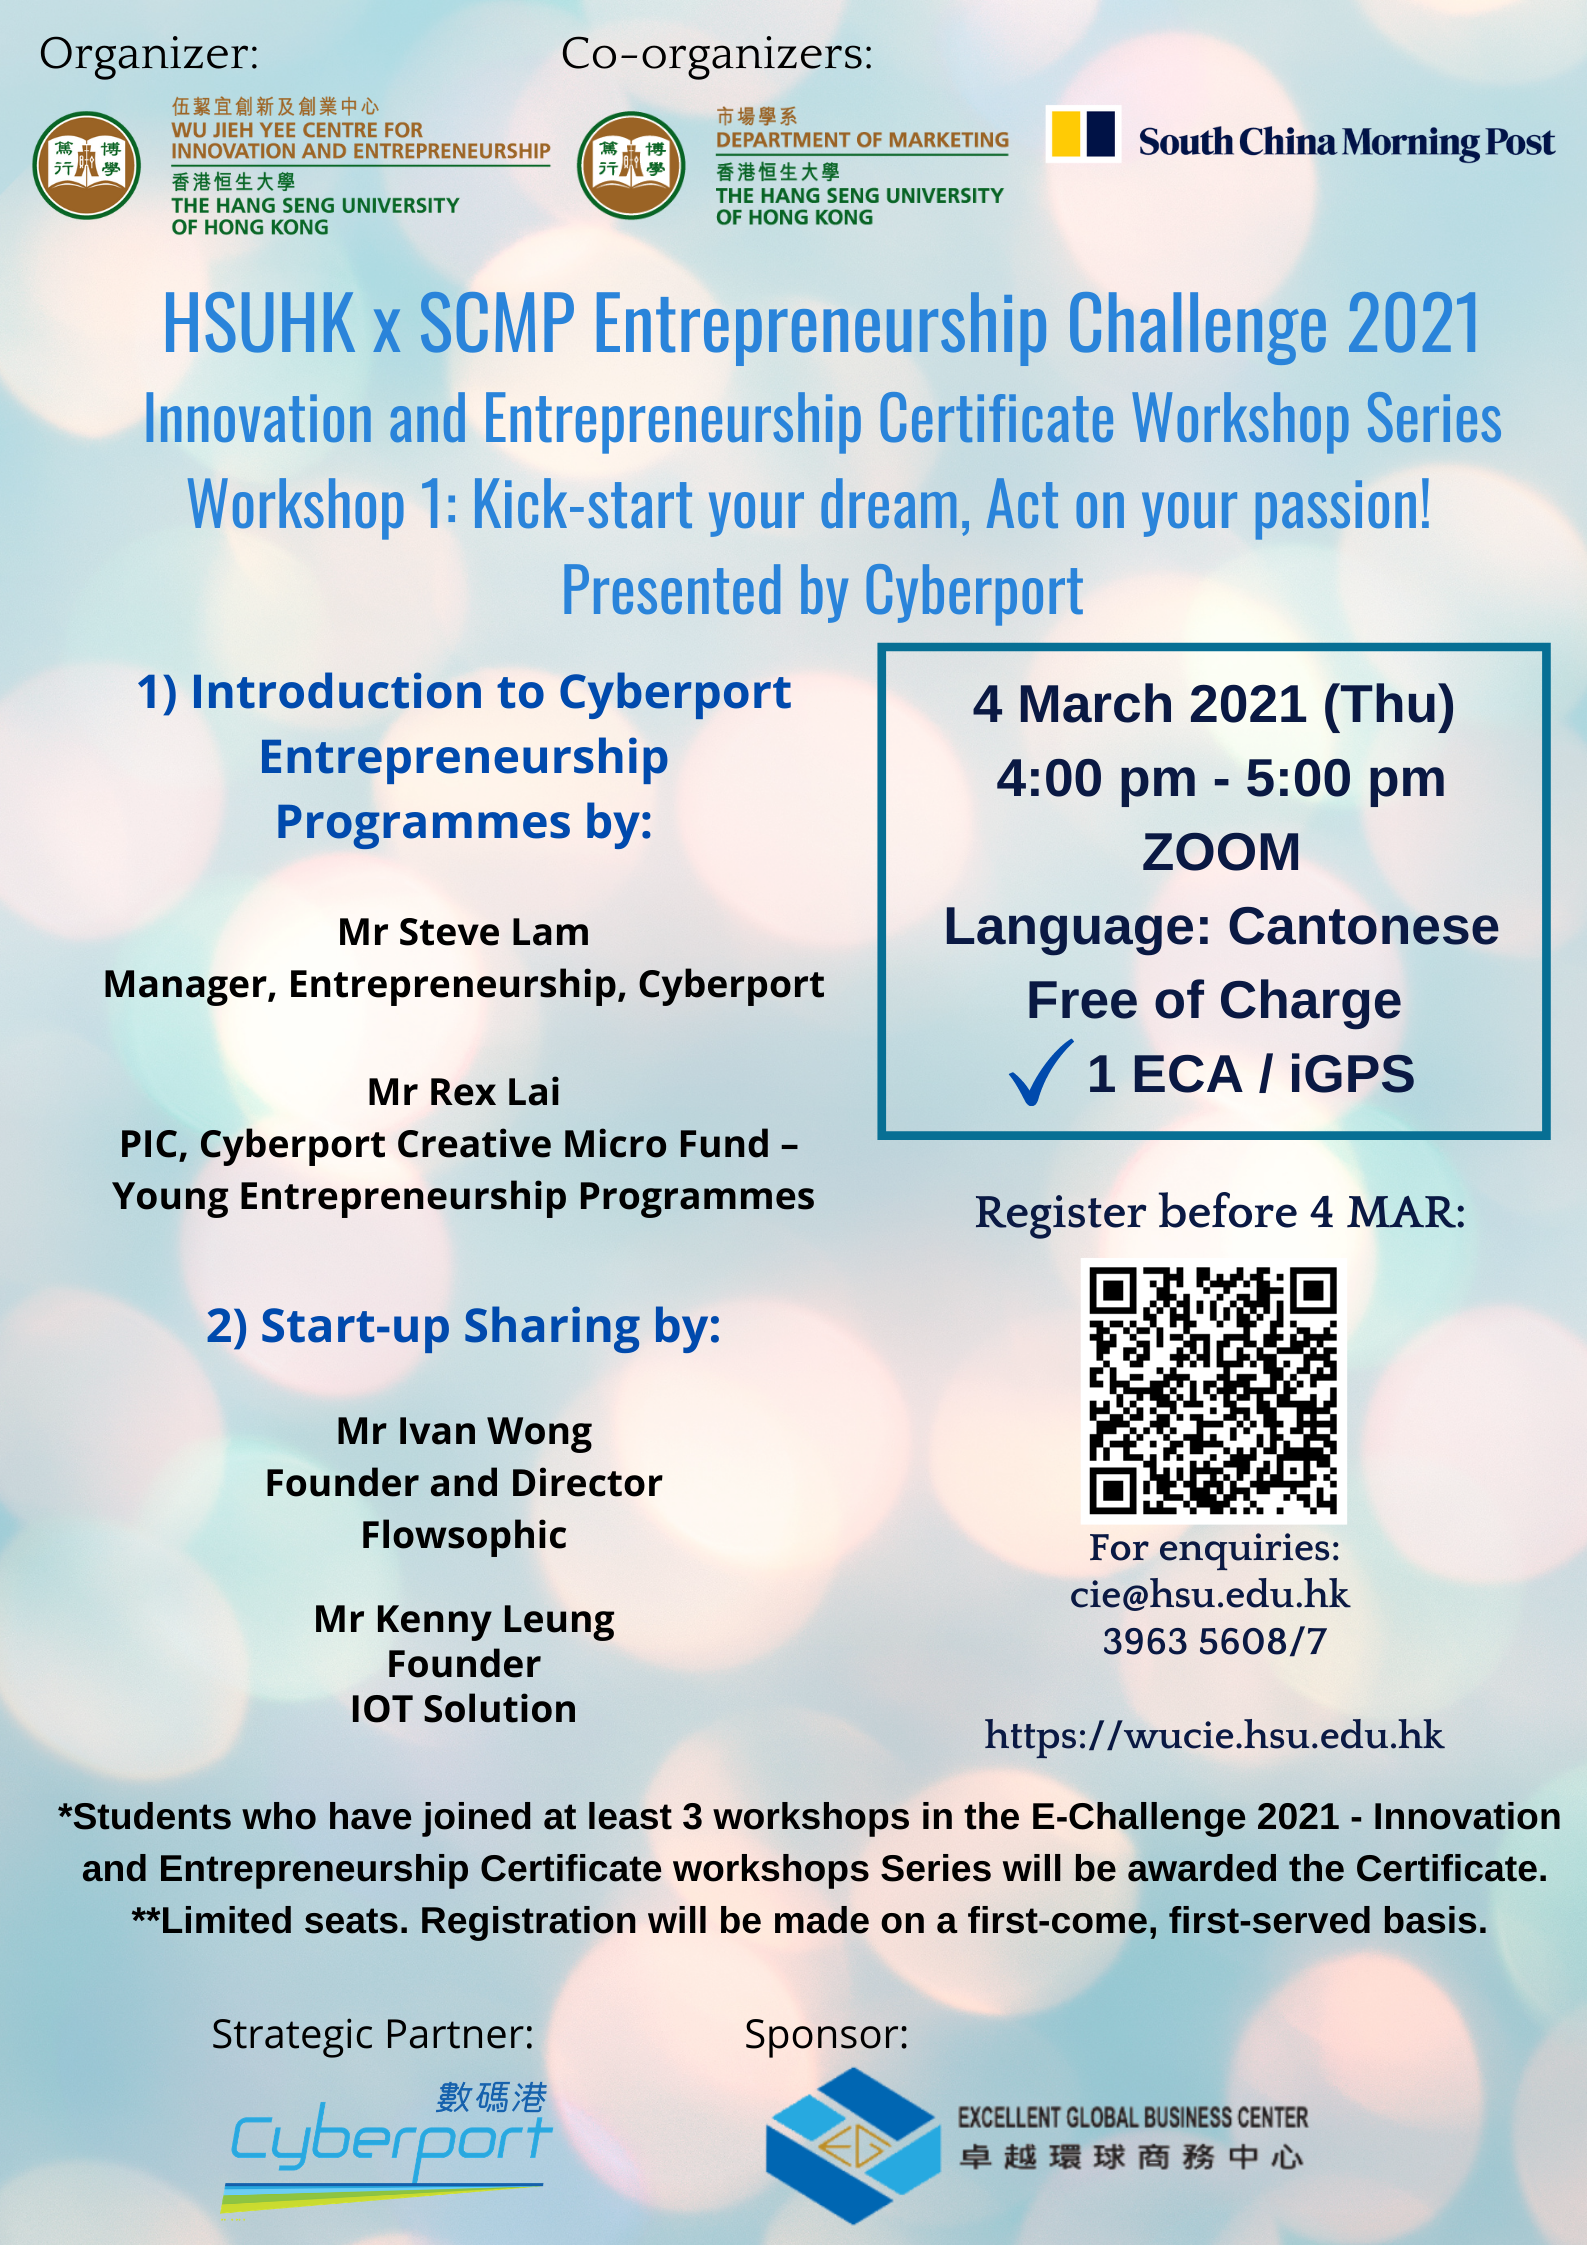 Ver.2 Draft Poster - E-Challenge 2021 - Cyberport Training workshop (4 Mar 2021)